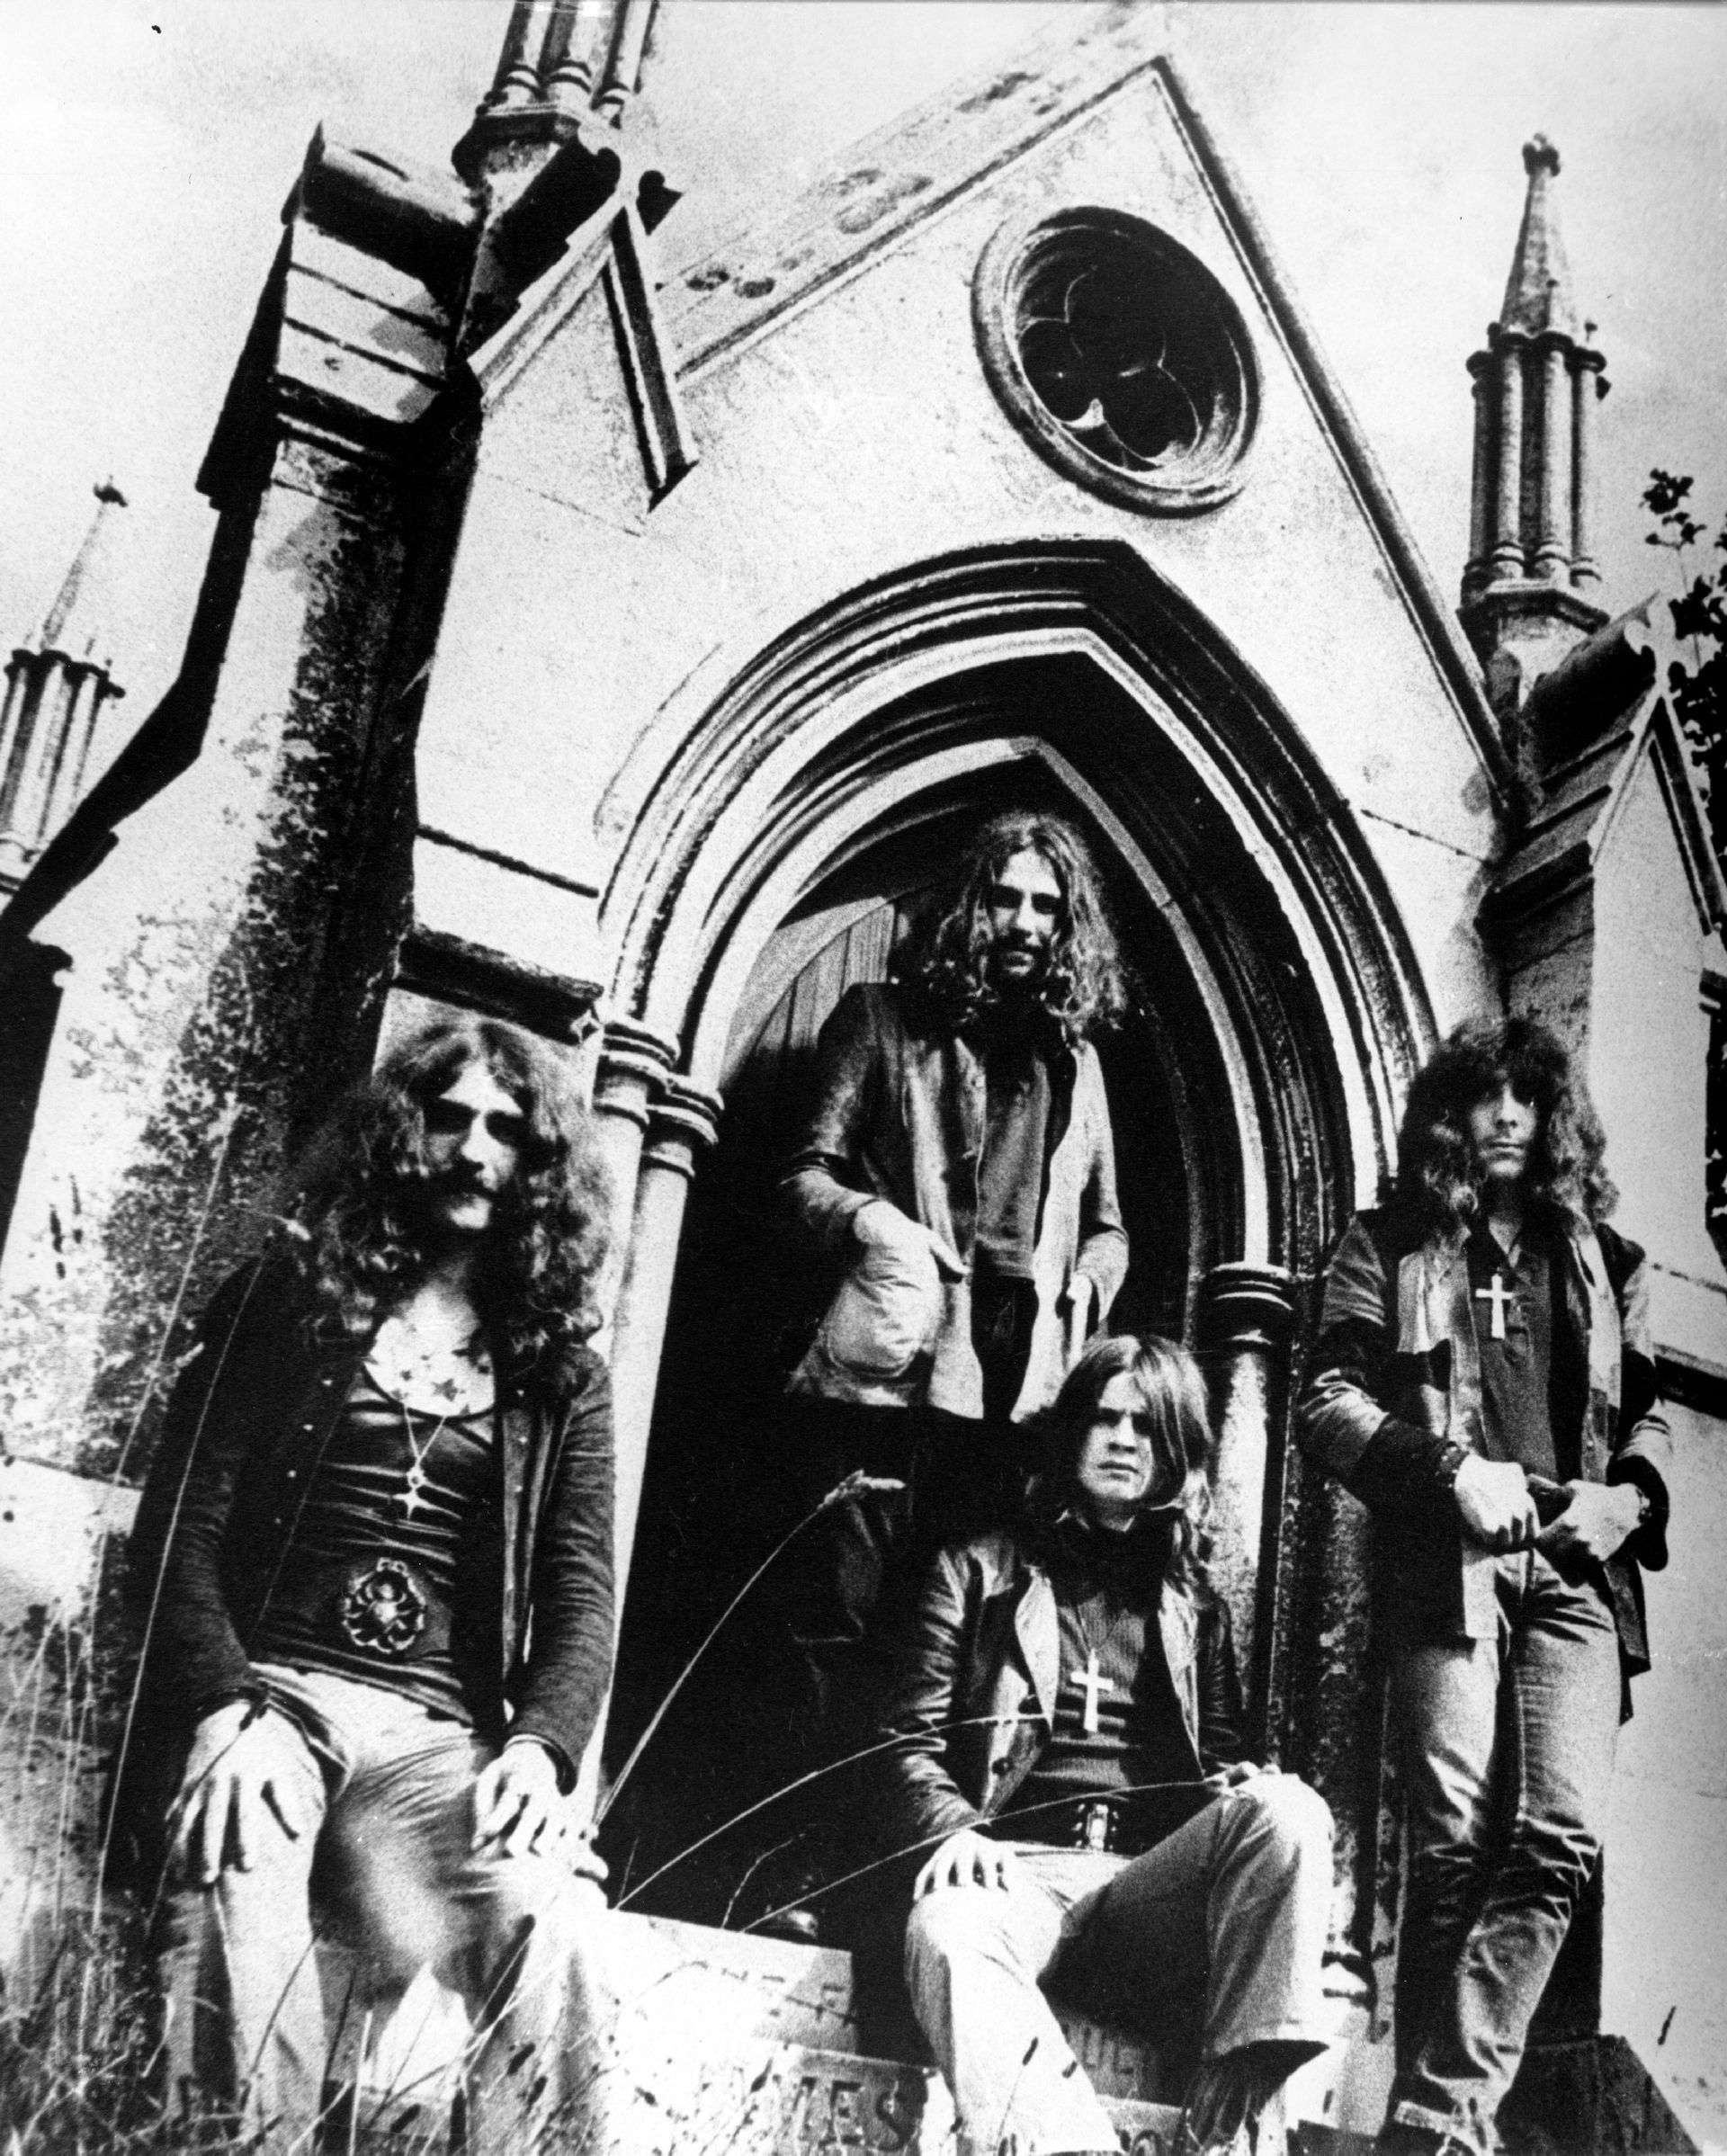 Les 50 ans de "Paranoid" de Black Sabbath